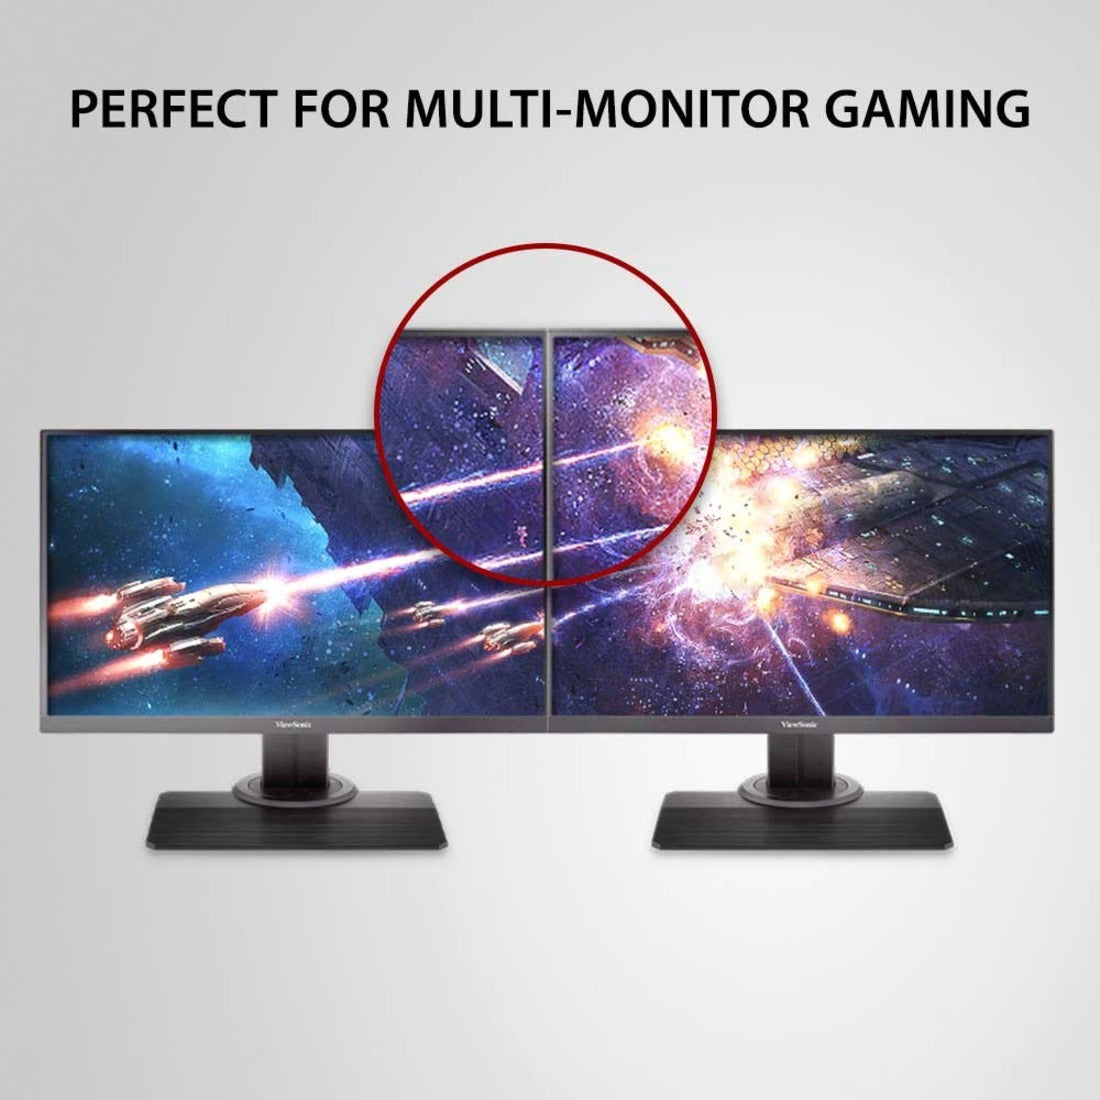 ViewSonic XG2705 Gaming Monitor 27" 144Hz Frameless IPS LED FreeSync, Full HD 1920x1080, 2 x HDMI DP Speakers